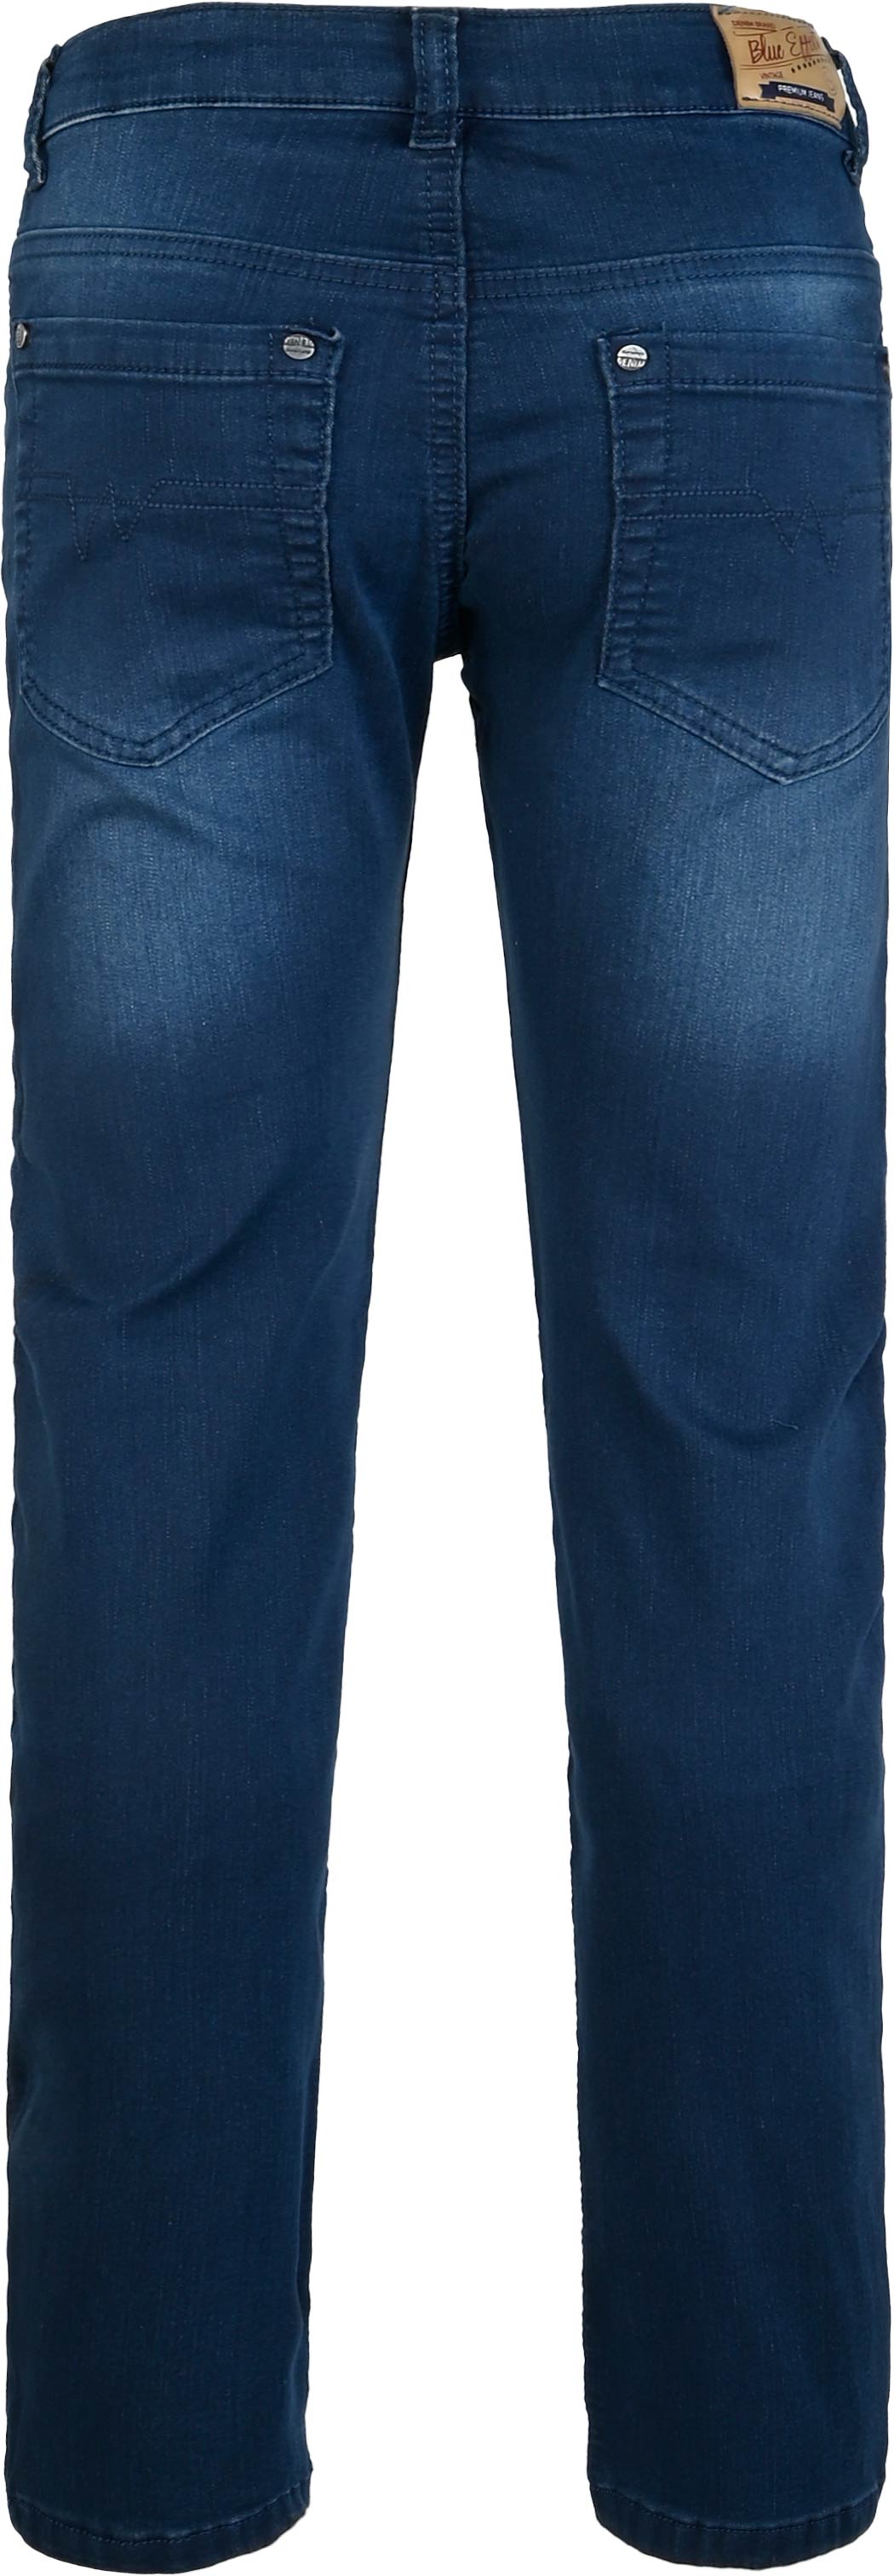 2726-NOS Boy Jeans Relaxed Fit, Ultrastretch, verfügbar in Slim,Normal